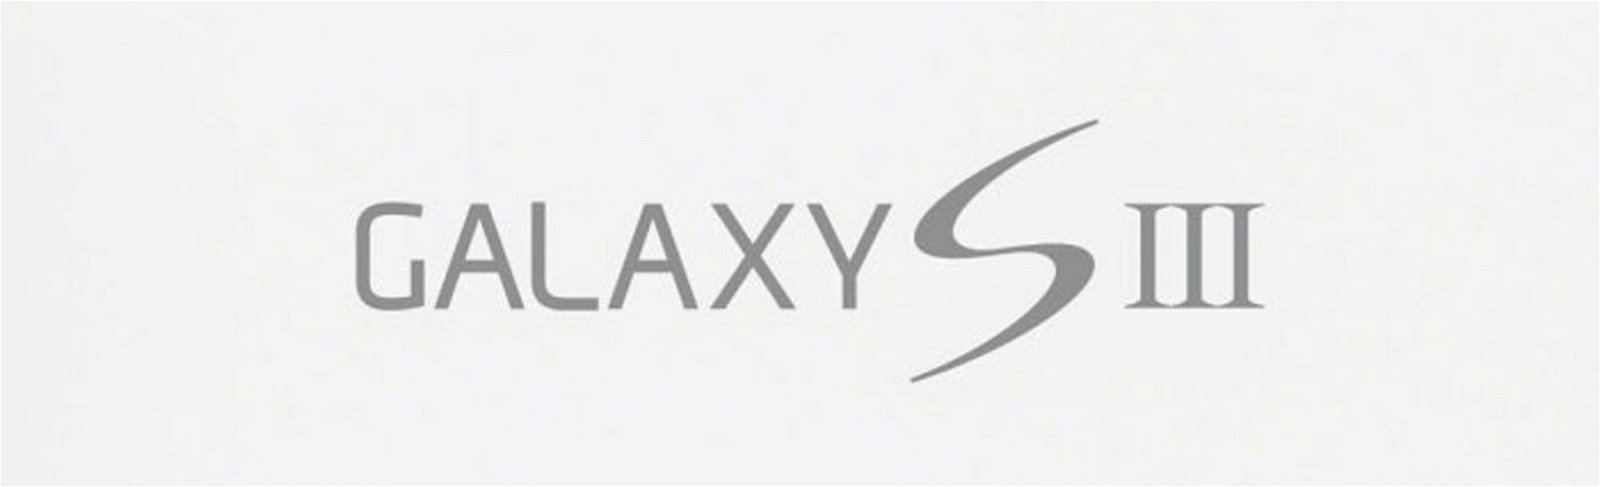 Logo del Samsung Galaxy S III